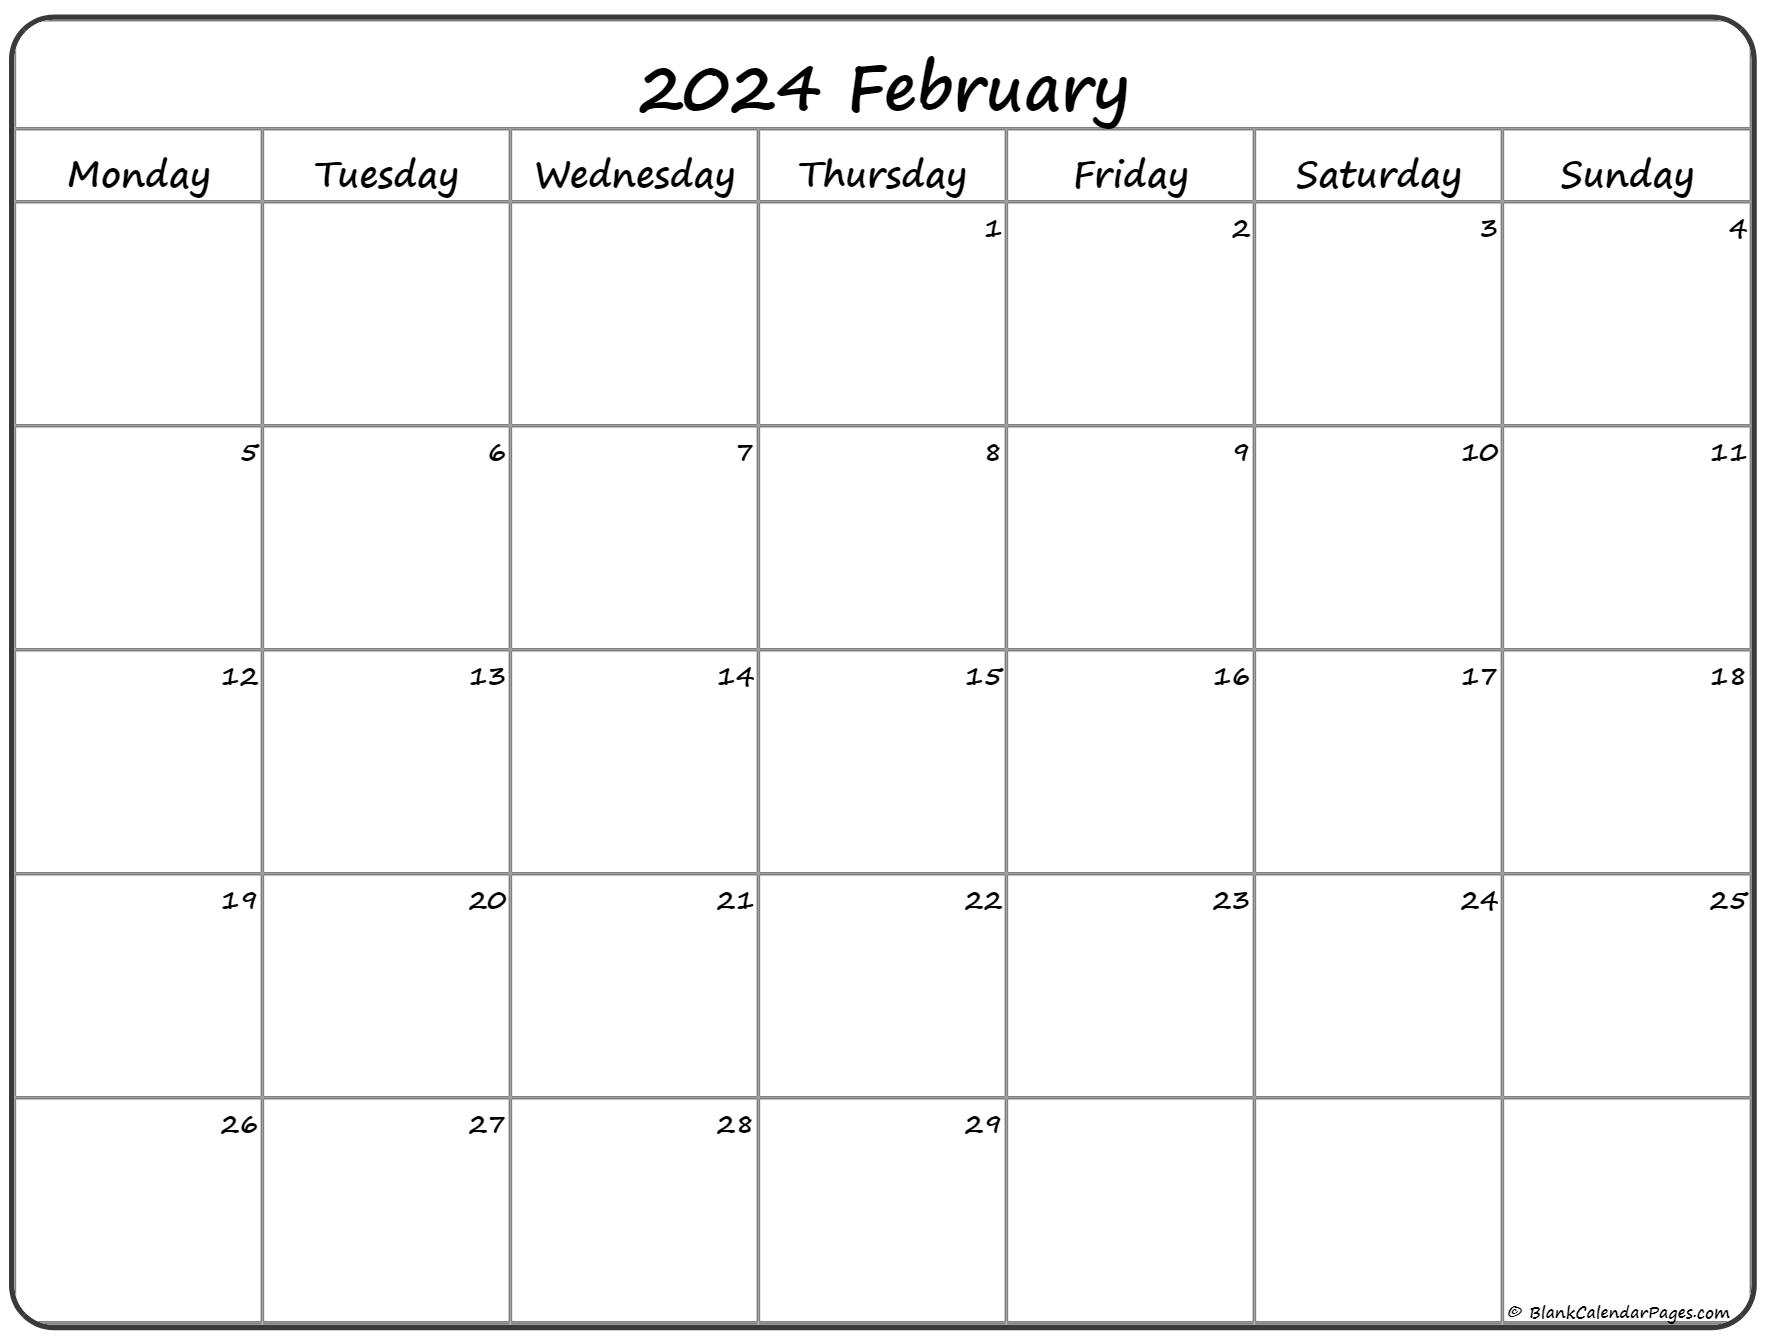 february-2023-monday-calendar-monday-to-sunday